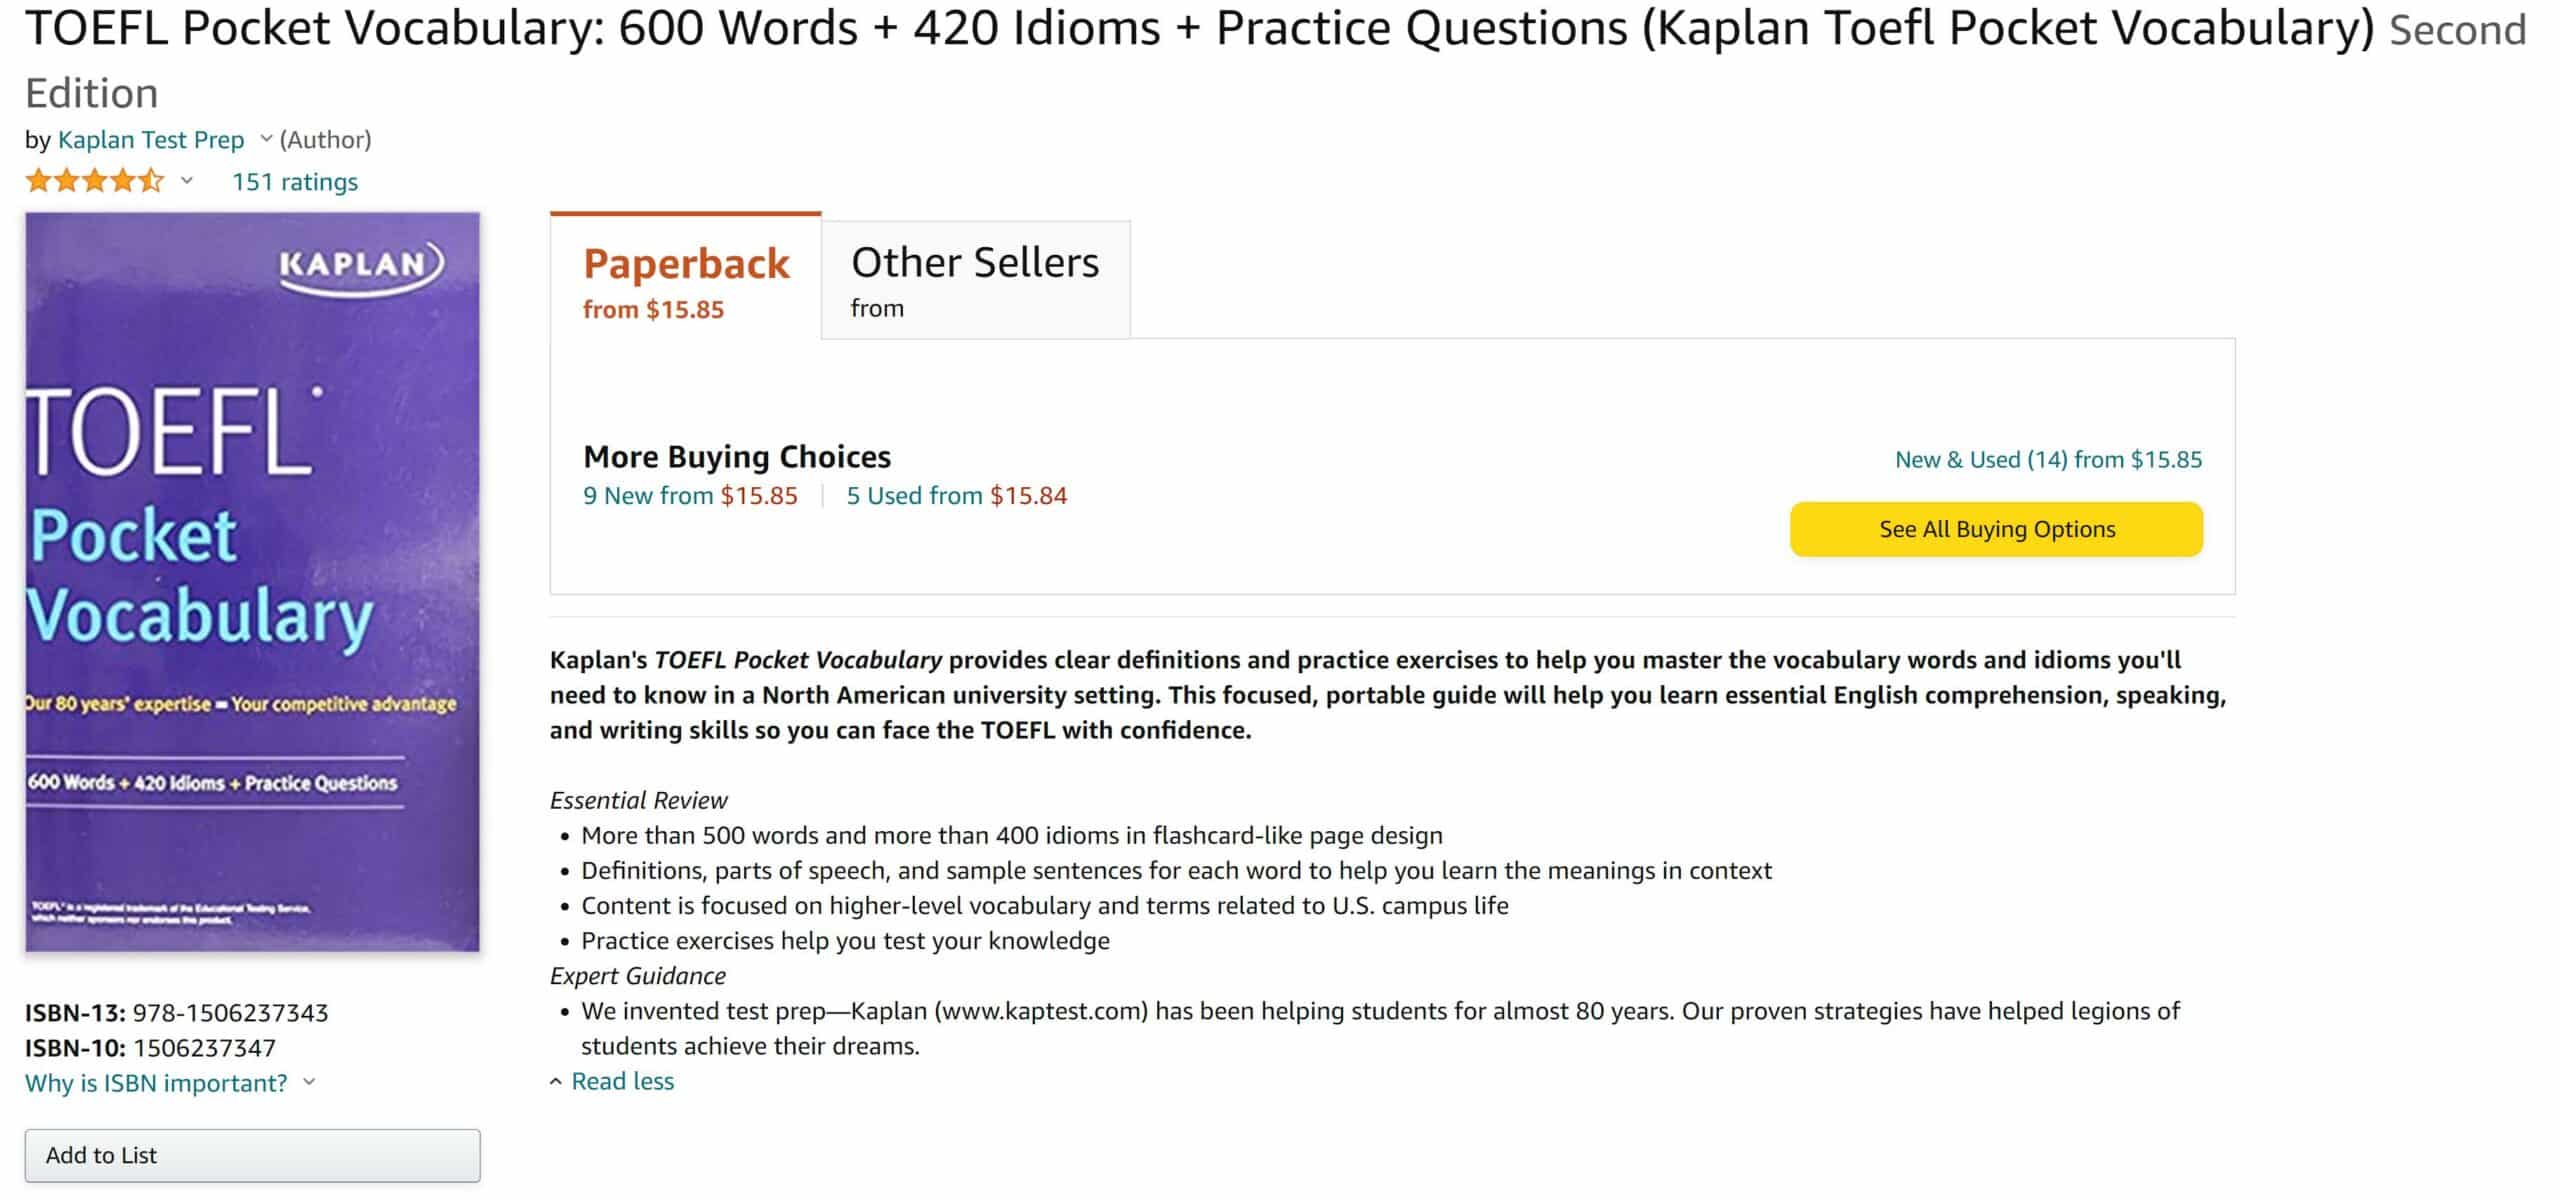 Kaplan TOEFL Pocket Vocabulary Book or Guide